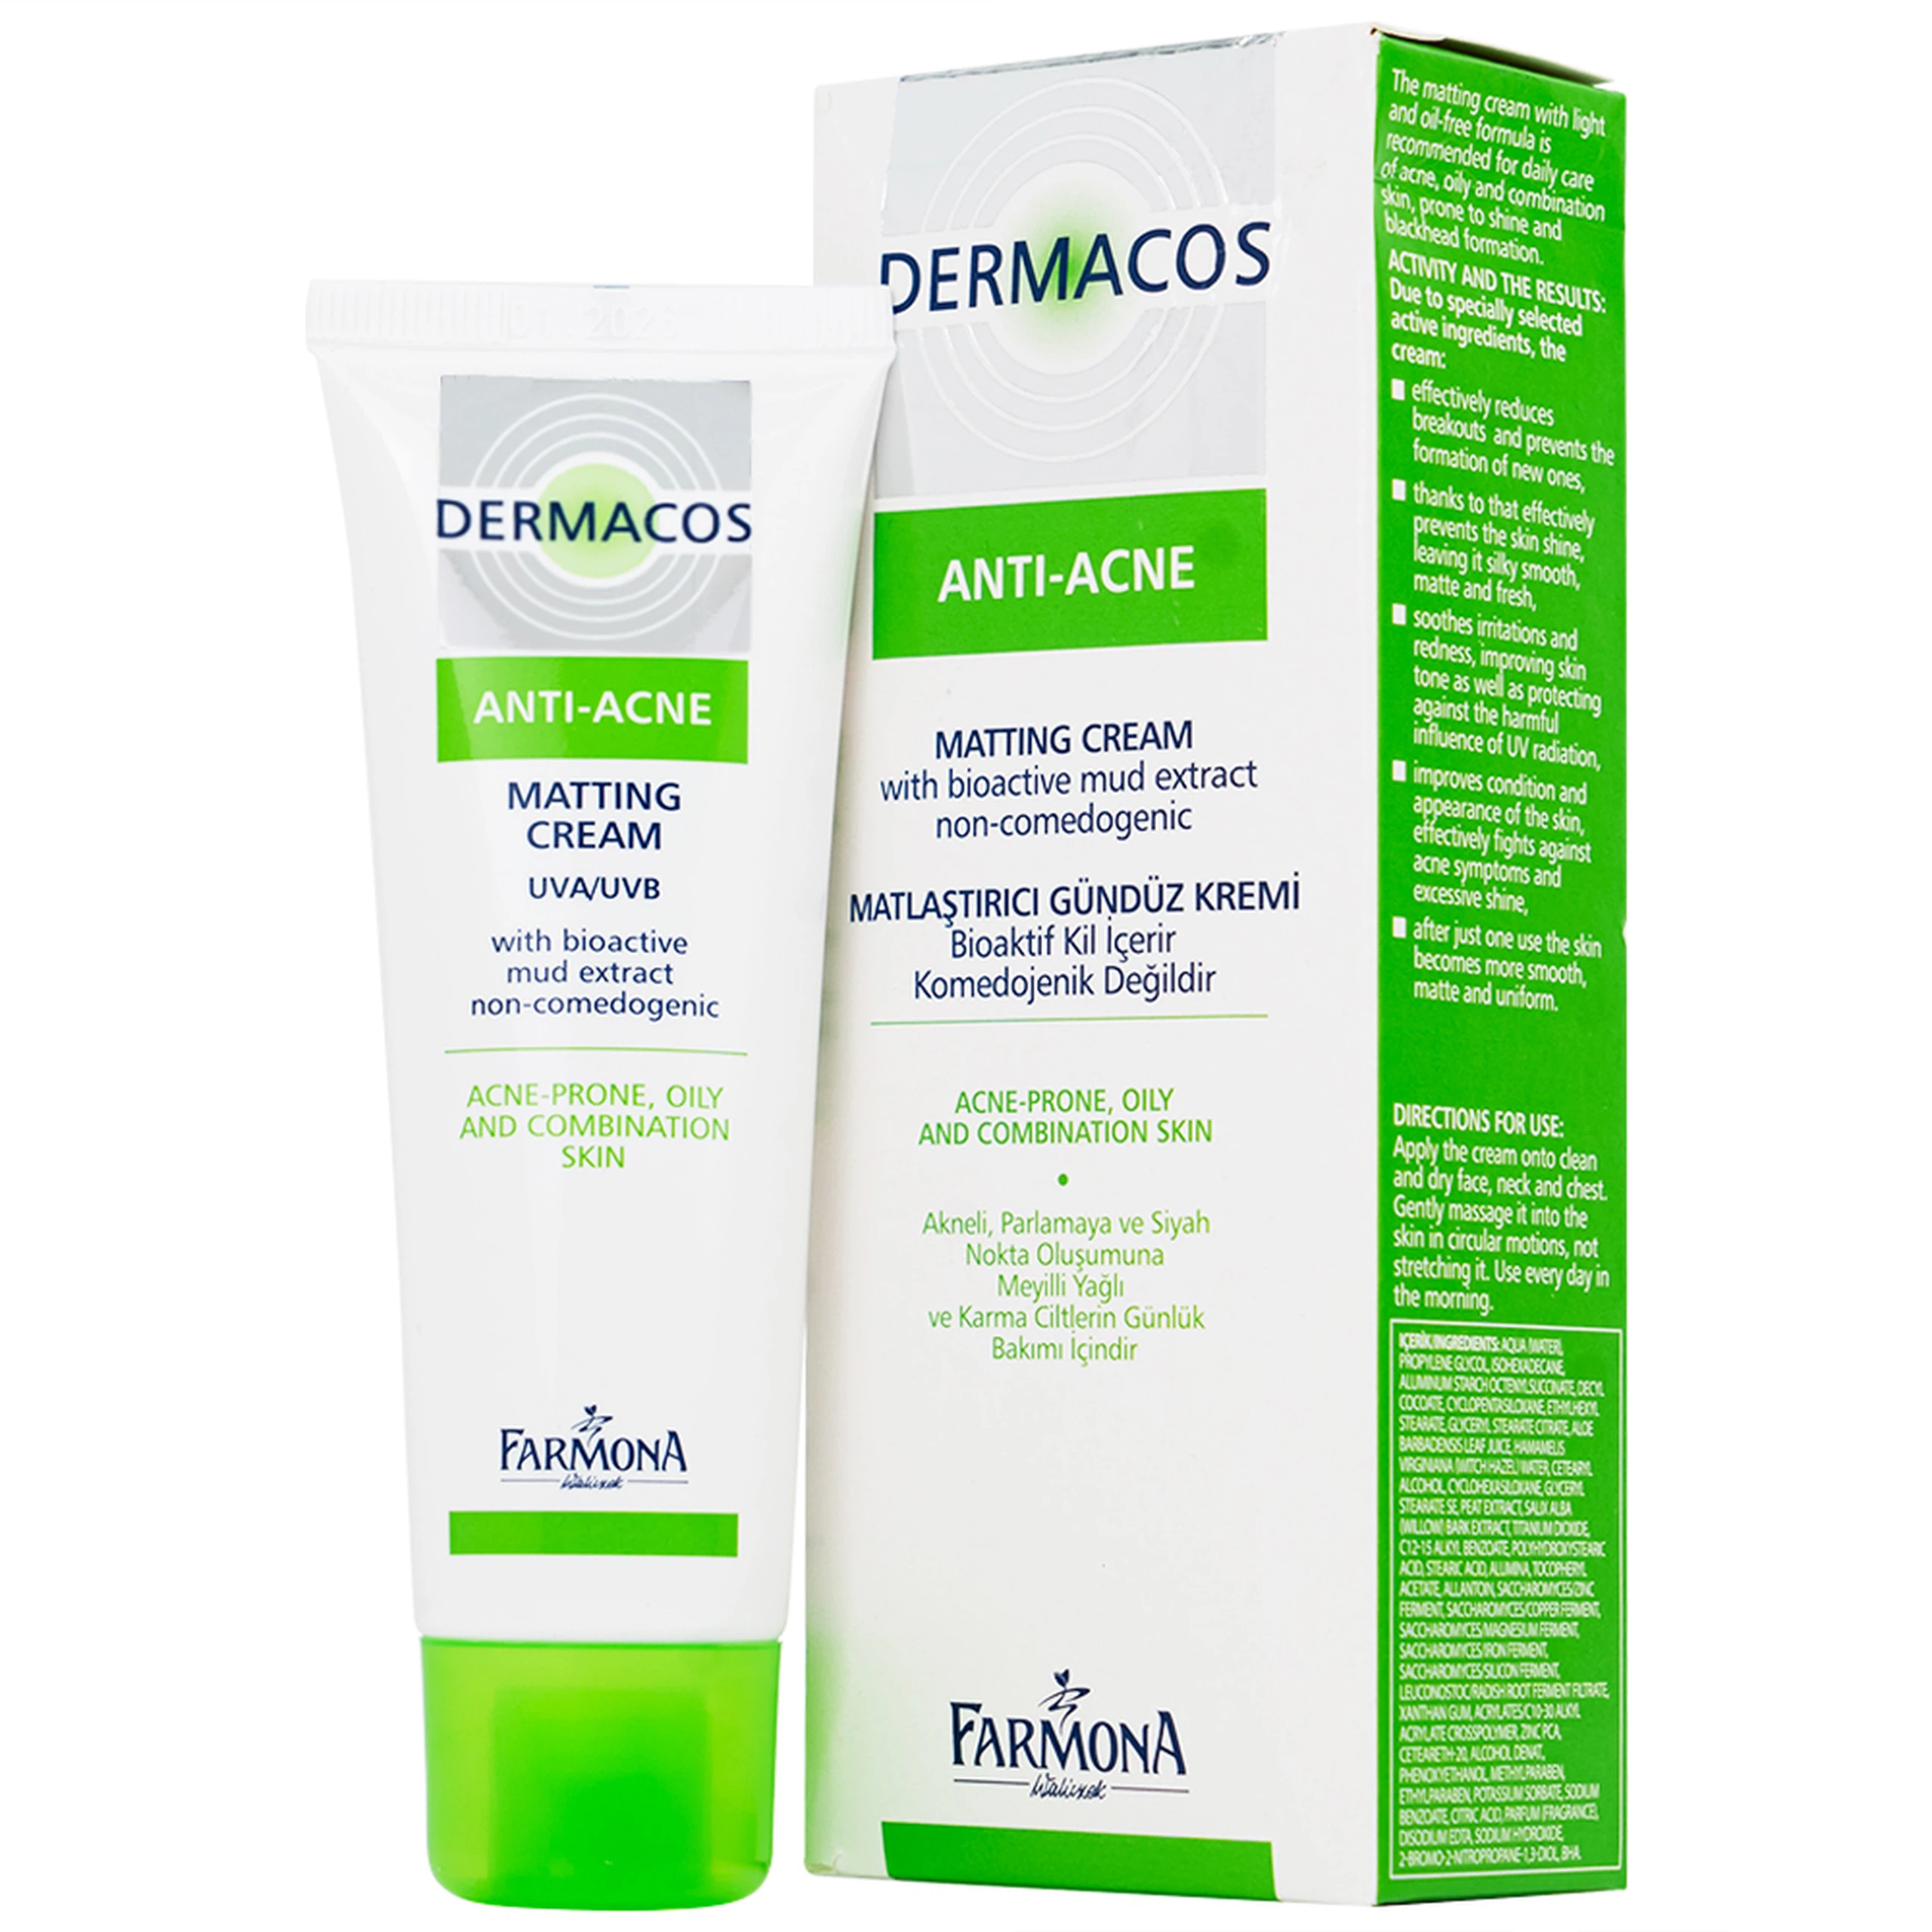 Kem Dermacos Anti-Acne Matting Cream giảm nhờn, ngăn ngừa mụn (50ml)